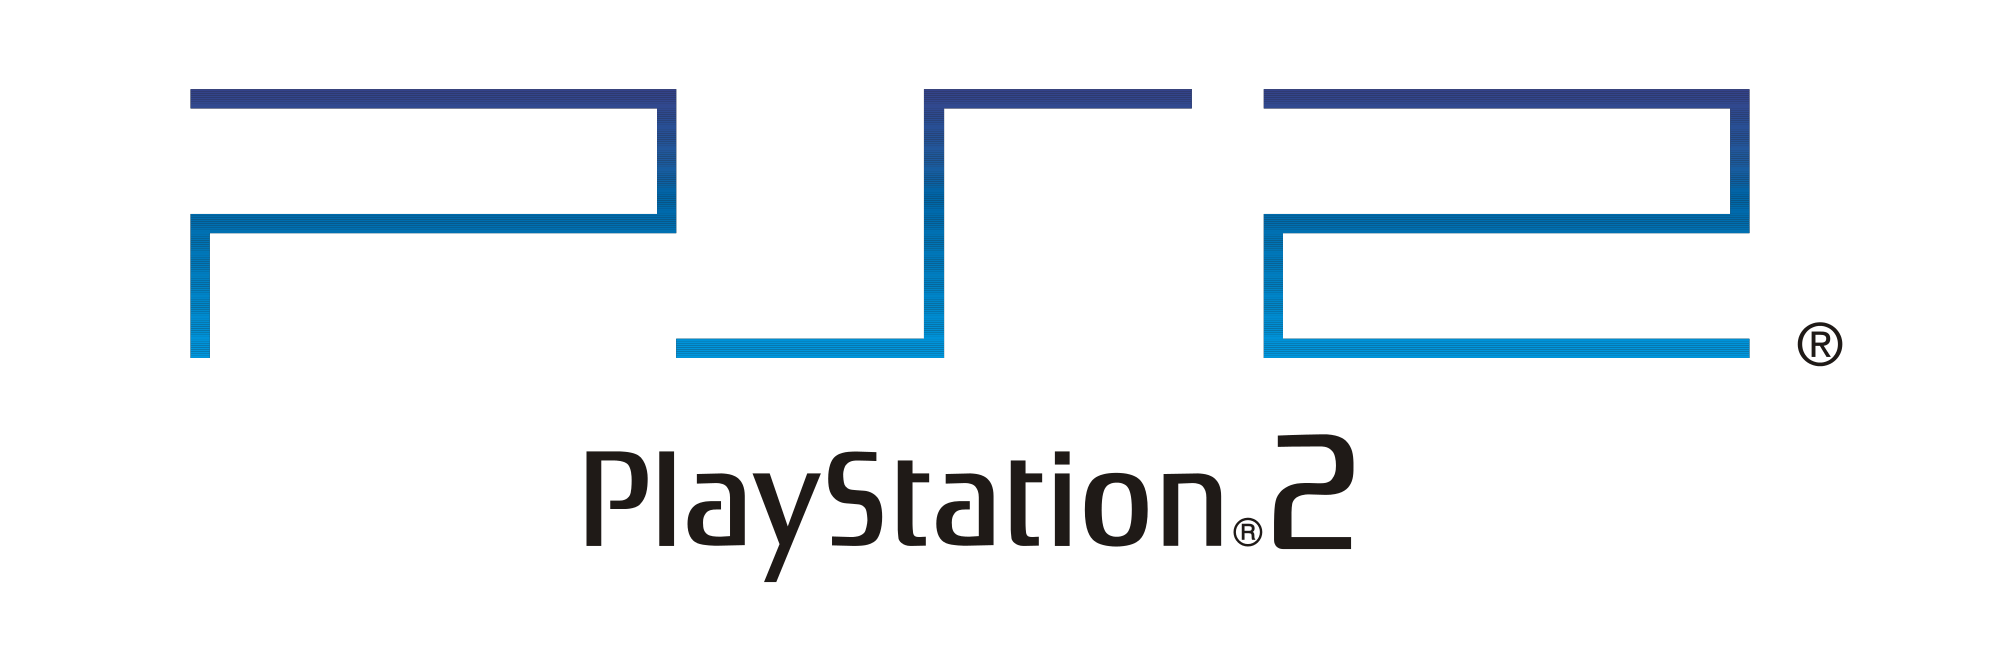 PlayStation 2 Logo - File:Playstation2-Logo.svg - Wikimedia Commons